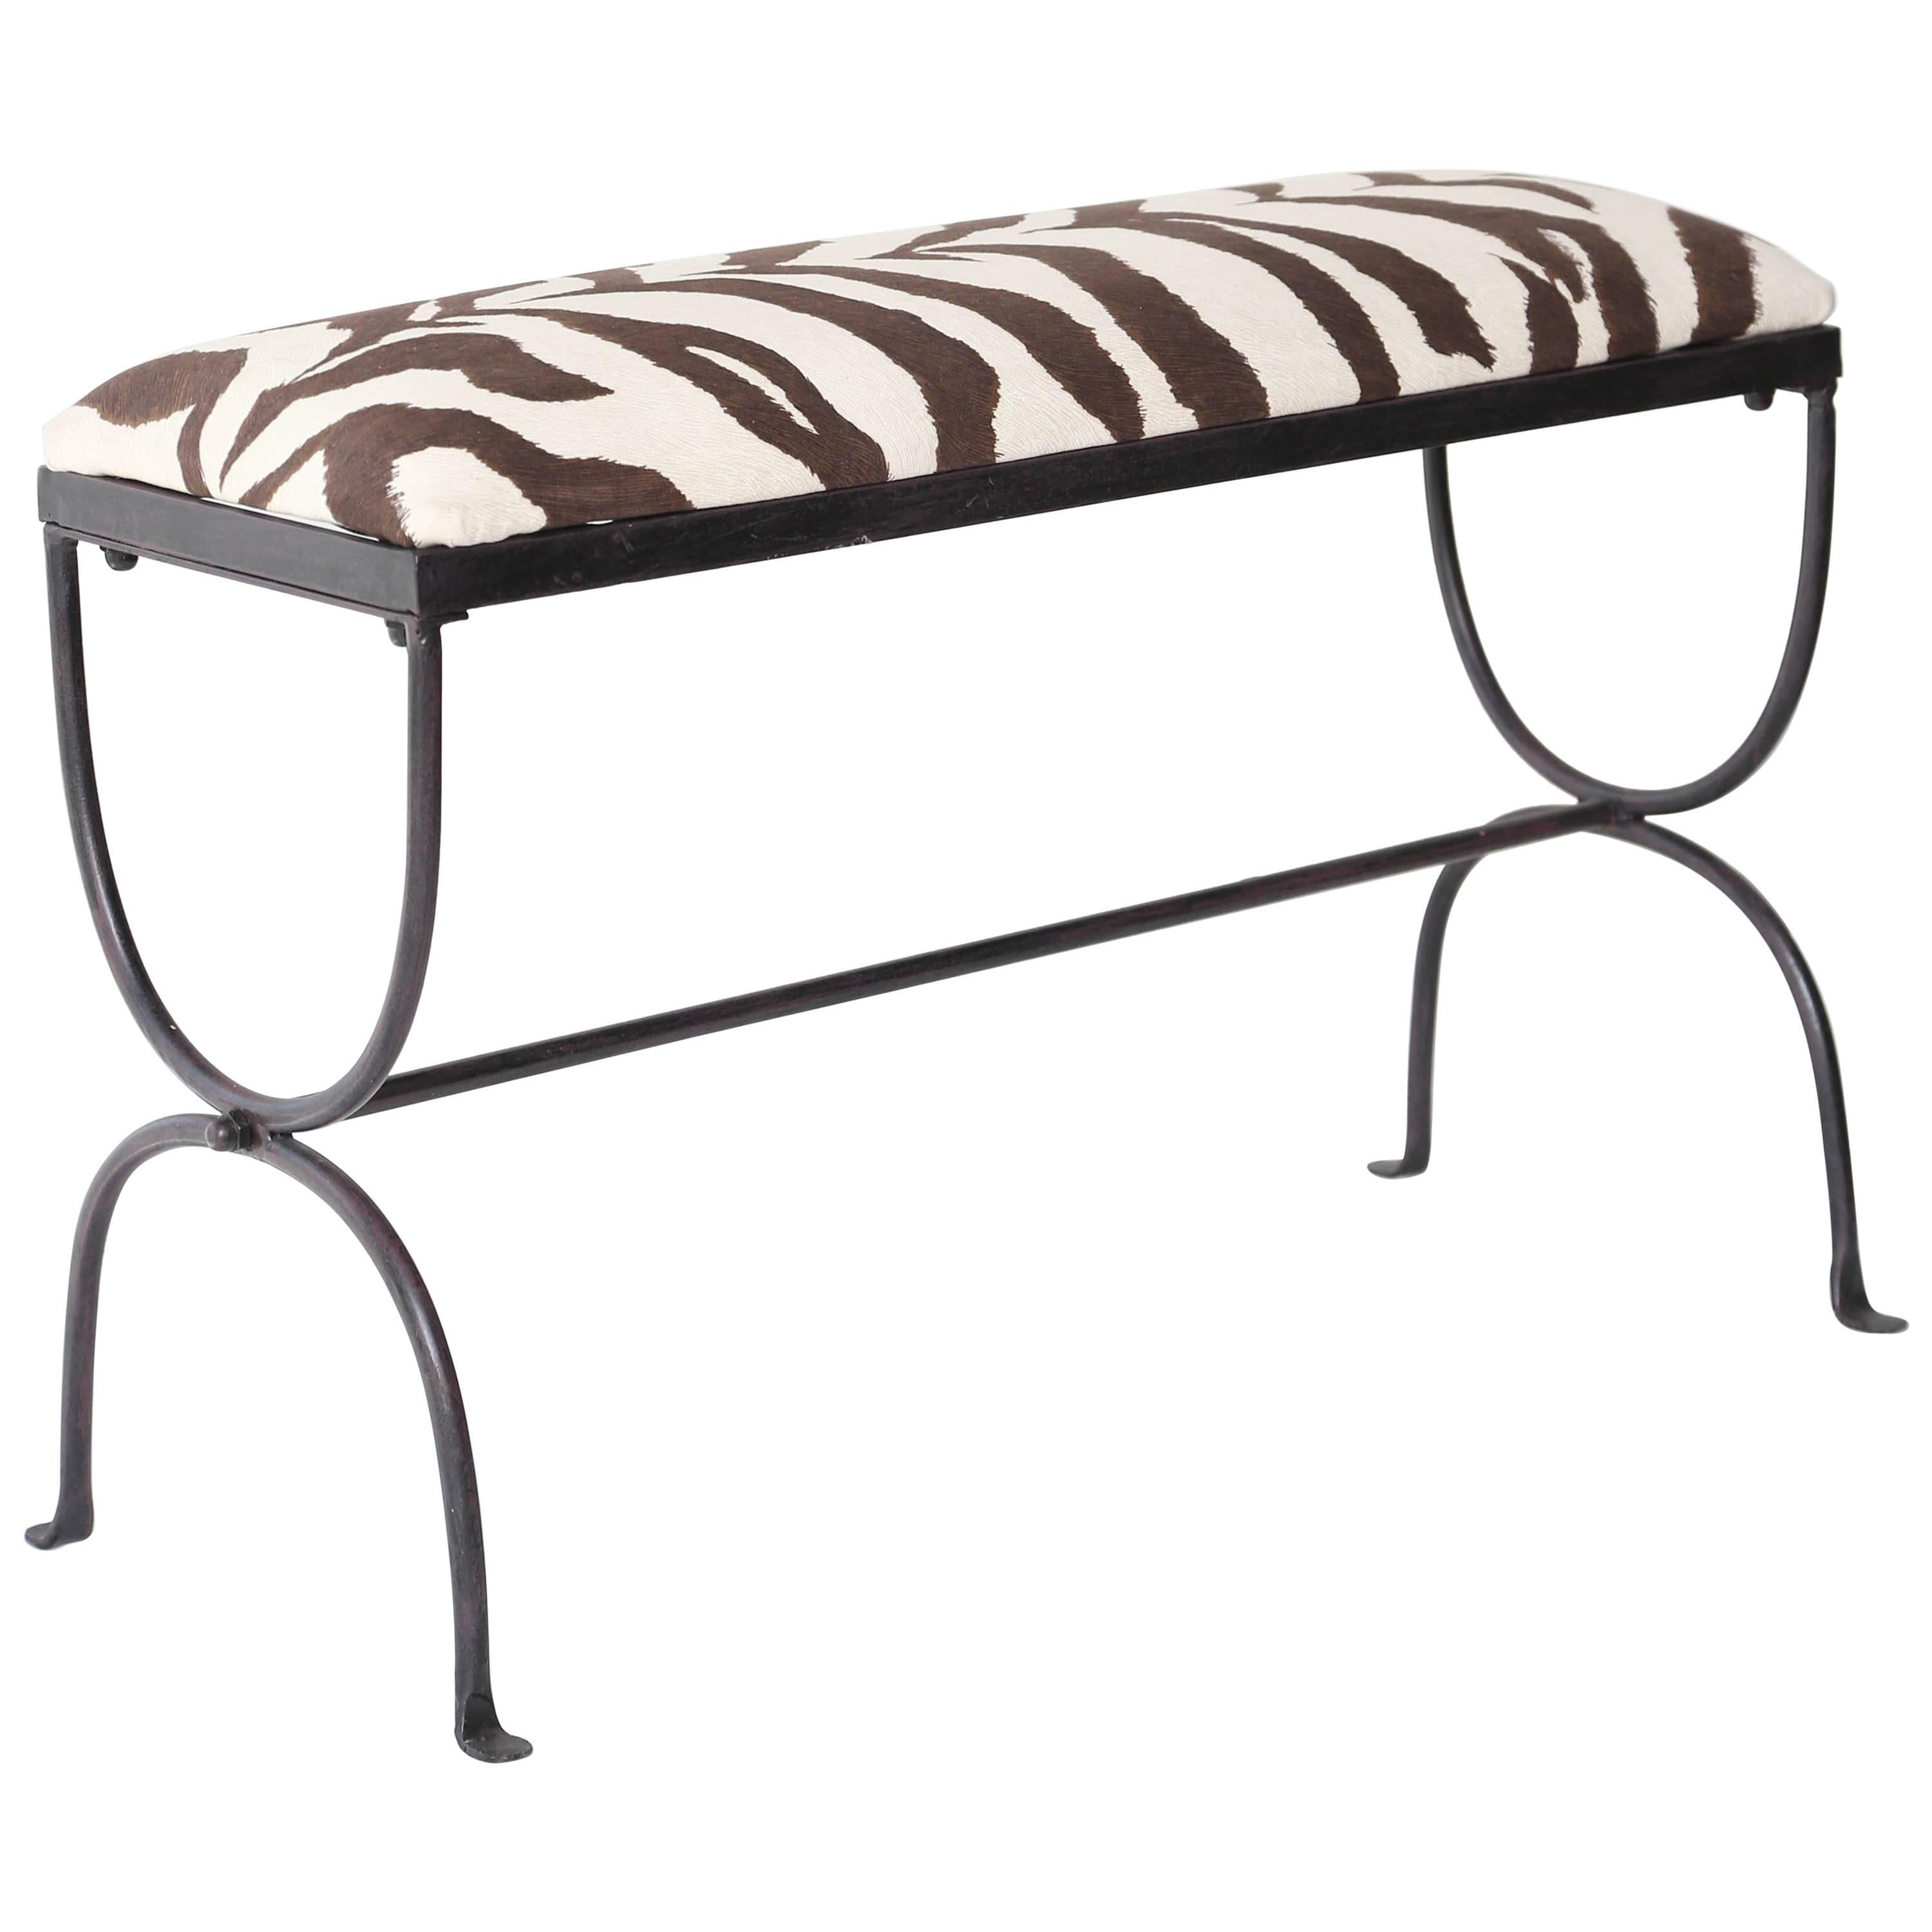 Black Iron Bench with Zebra Fabric Cushion